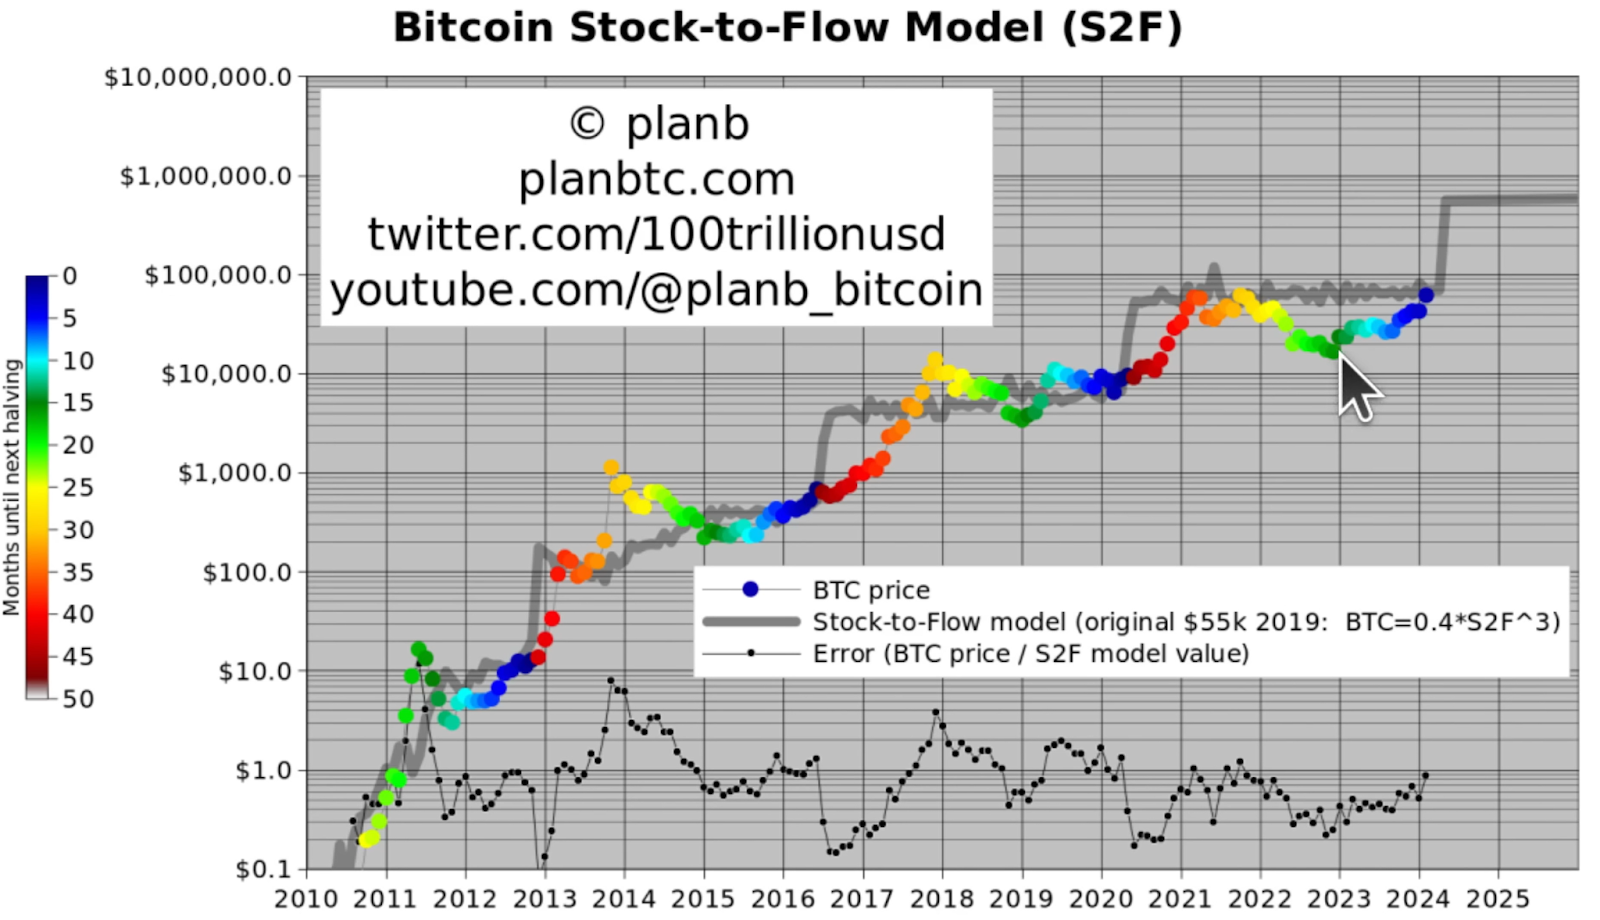 Plan B’s Stock-to-Flow Model via Plan B on Youtube